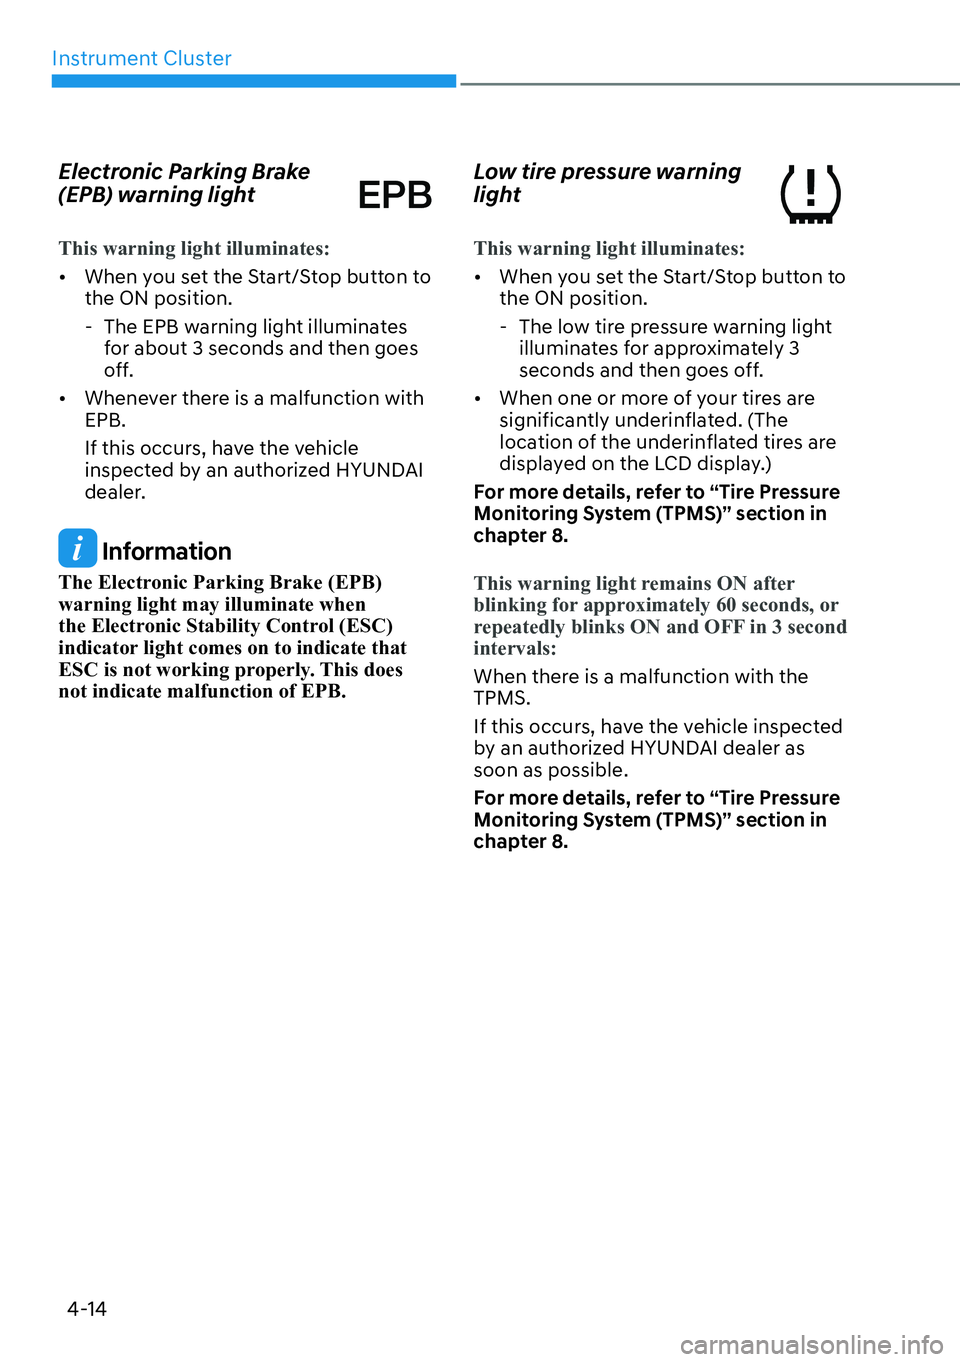 HYUNDAI IONIQ 5 2022  Owners Manual Instrument Cluster
4-14
Electronic Parking Brake 
(EPB) warning light
This warning light illuminates:
[�When you set the Start/Stop button to 
the ON position.
  - The EPB warning light illuminates 